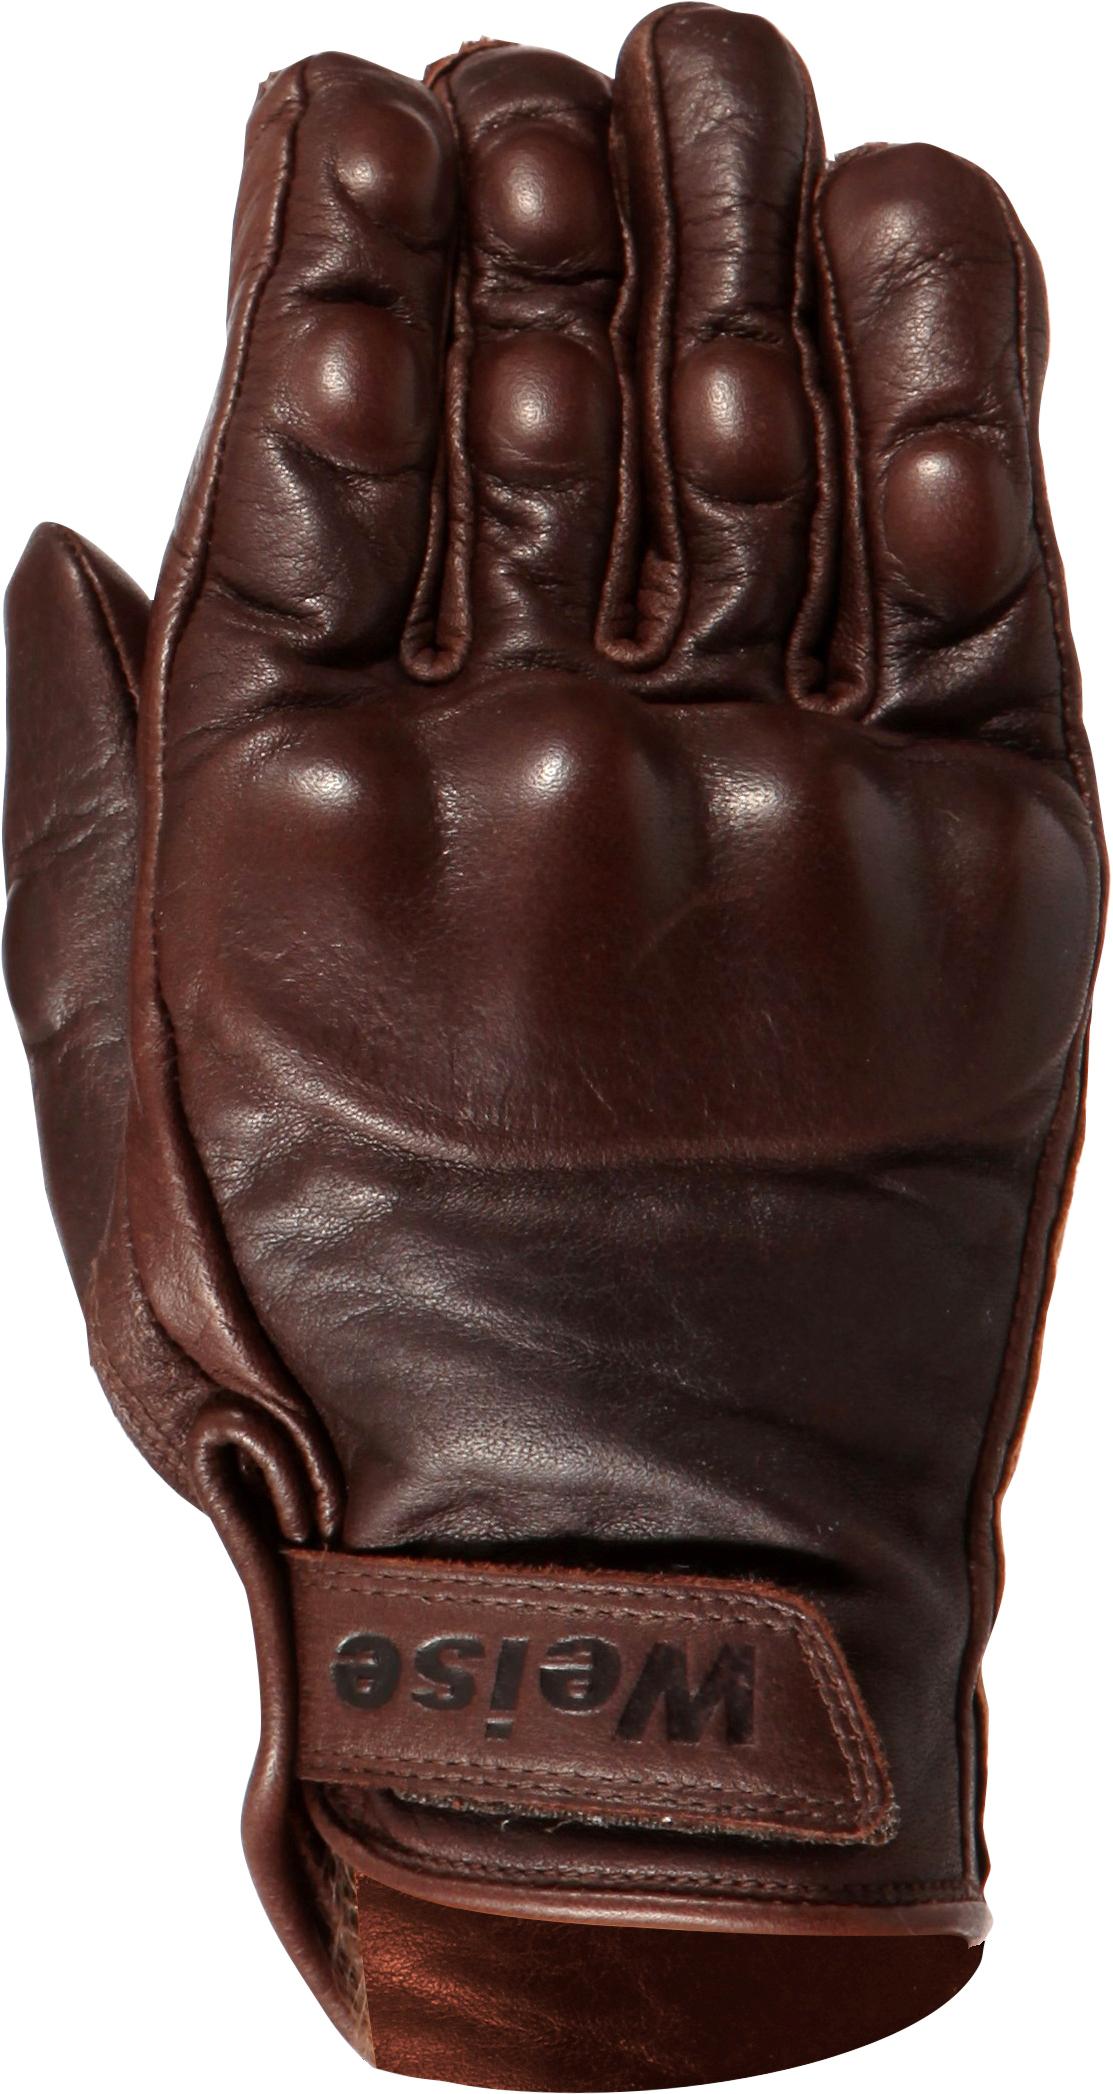 Weise Victory Gloves Brown 4Xl